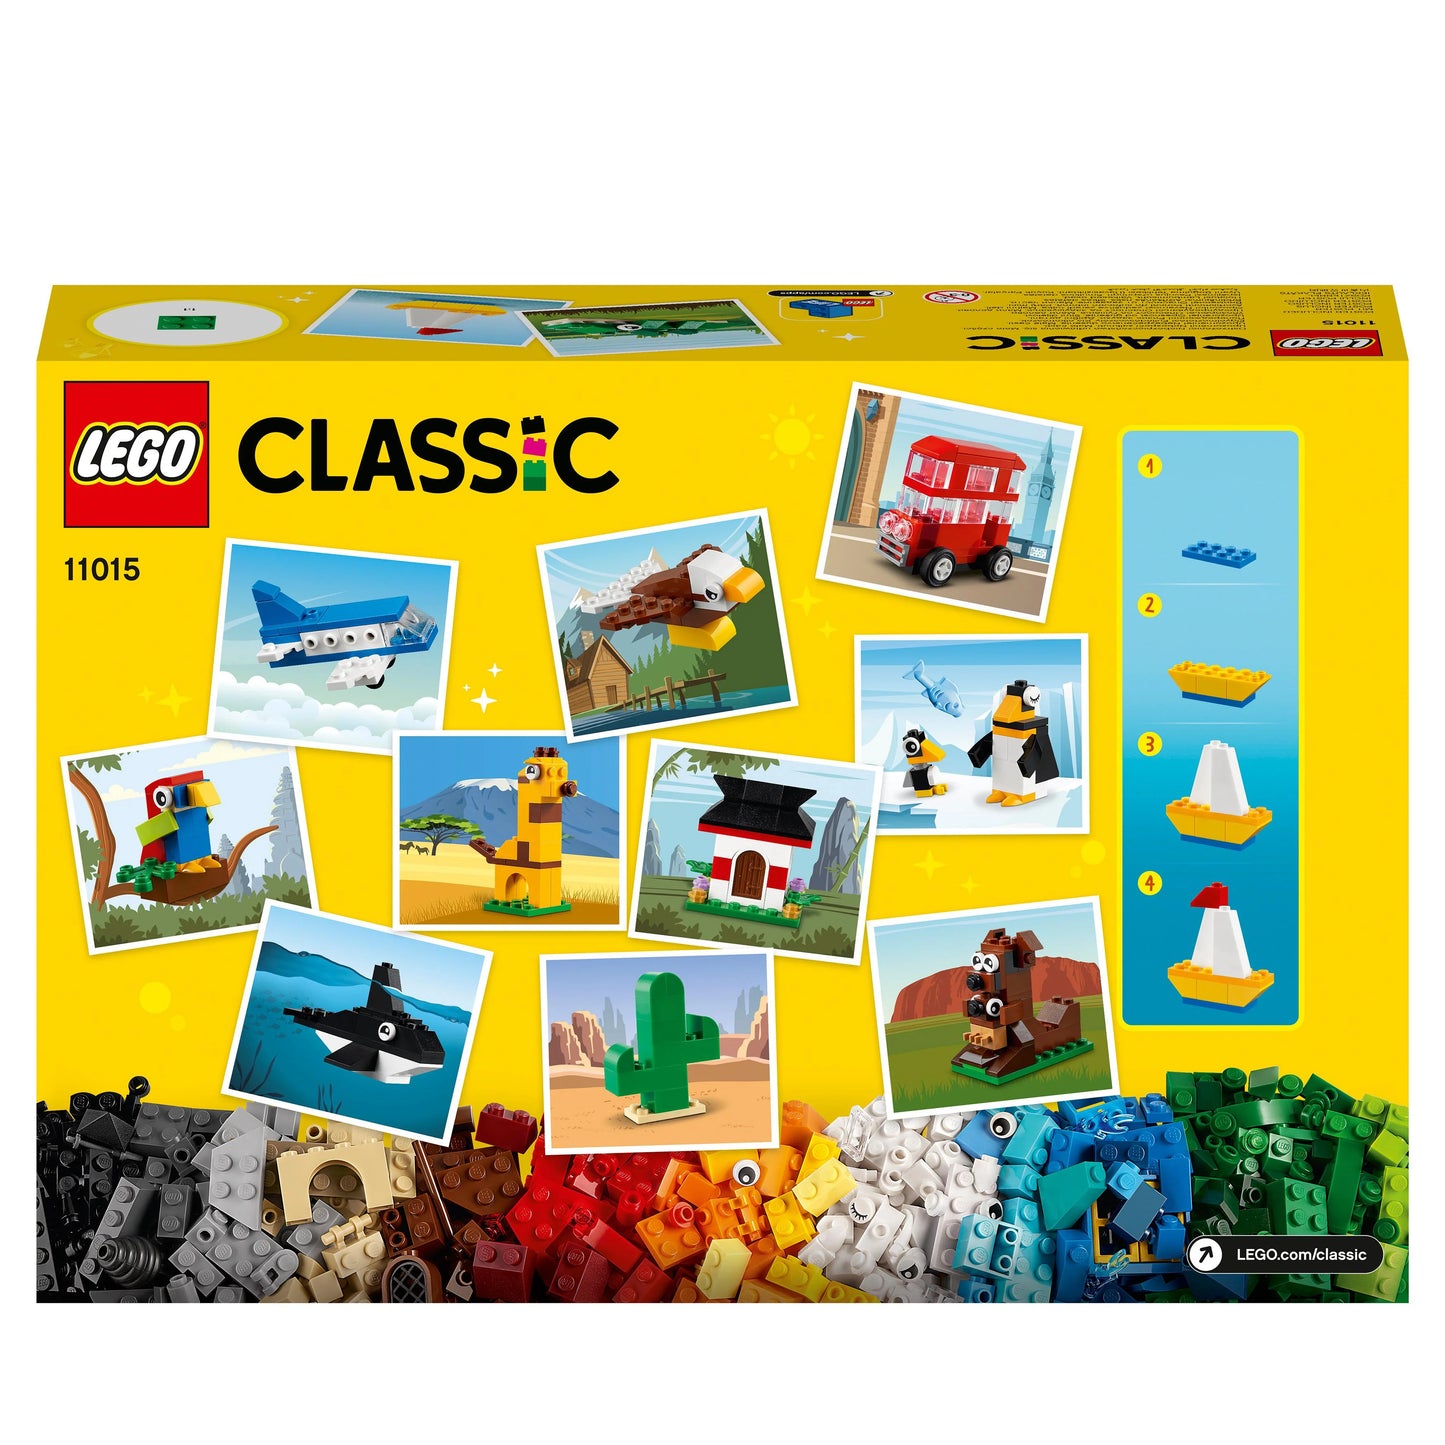 Around the World LEGO Classic